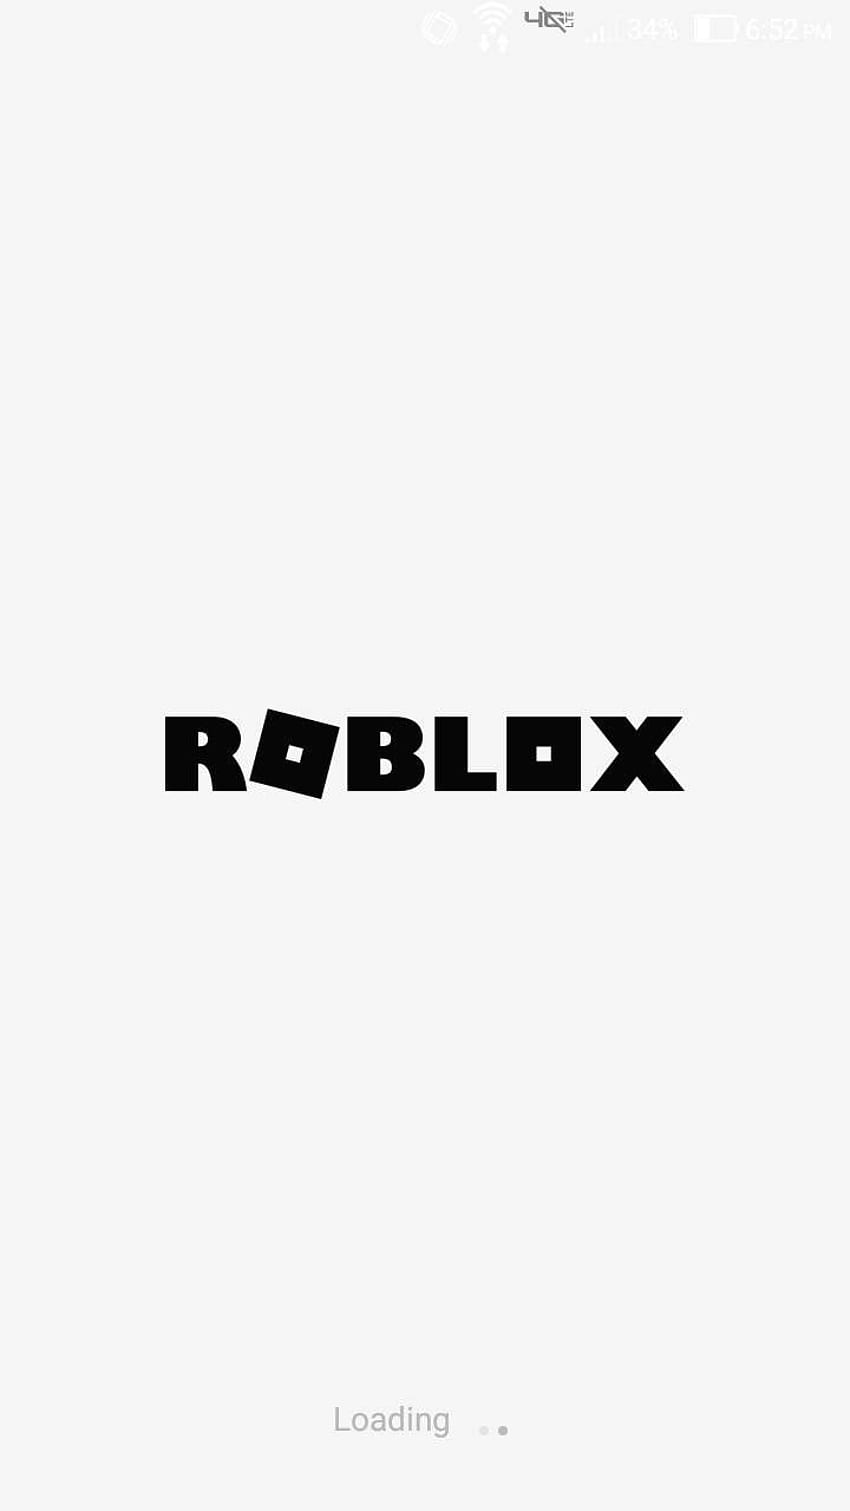 Roblox Wallpaper - KoLPaPer - Awesome Free HD Wallpapers